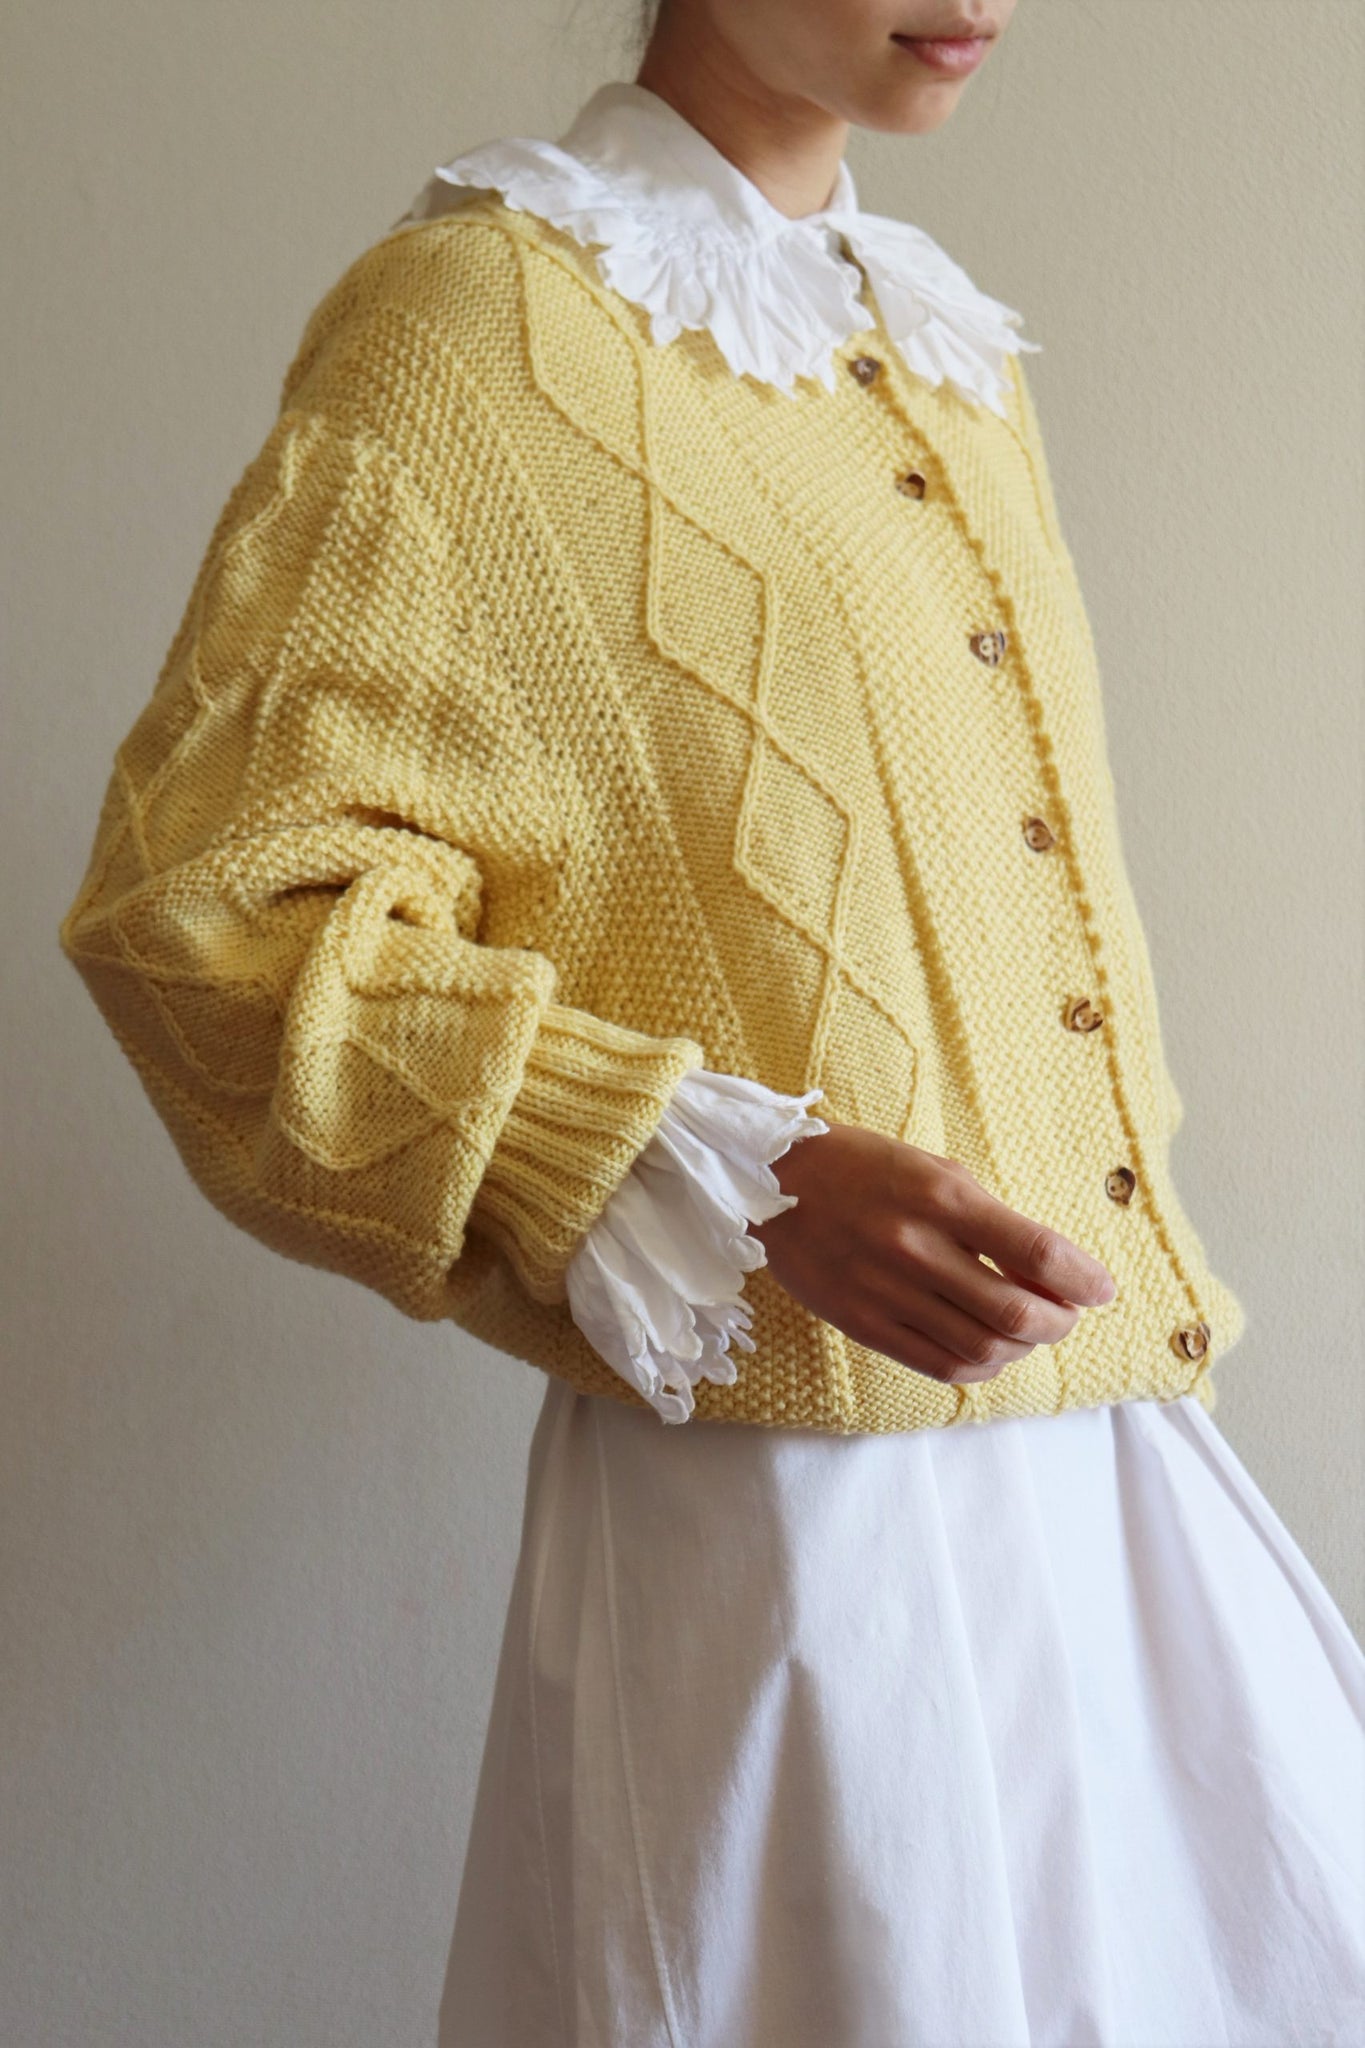 Buttercream Yellow Hand-Knit Cardigan